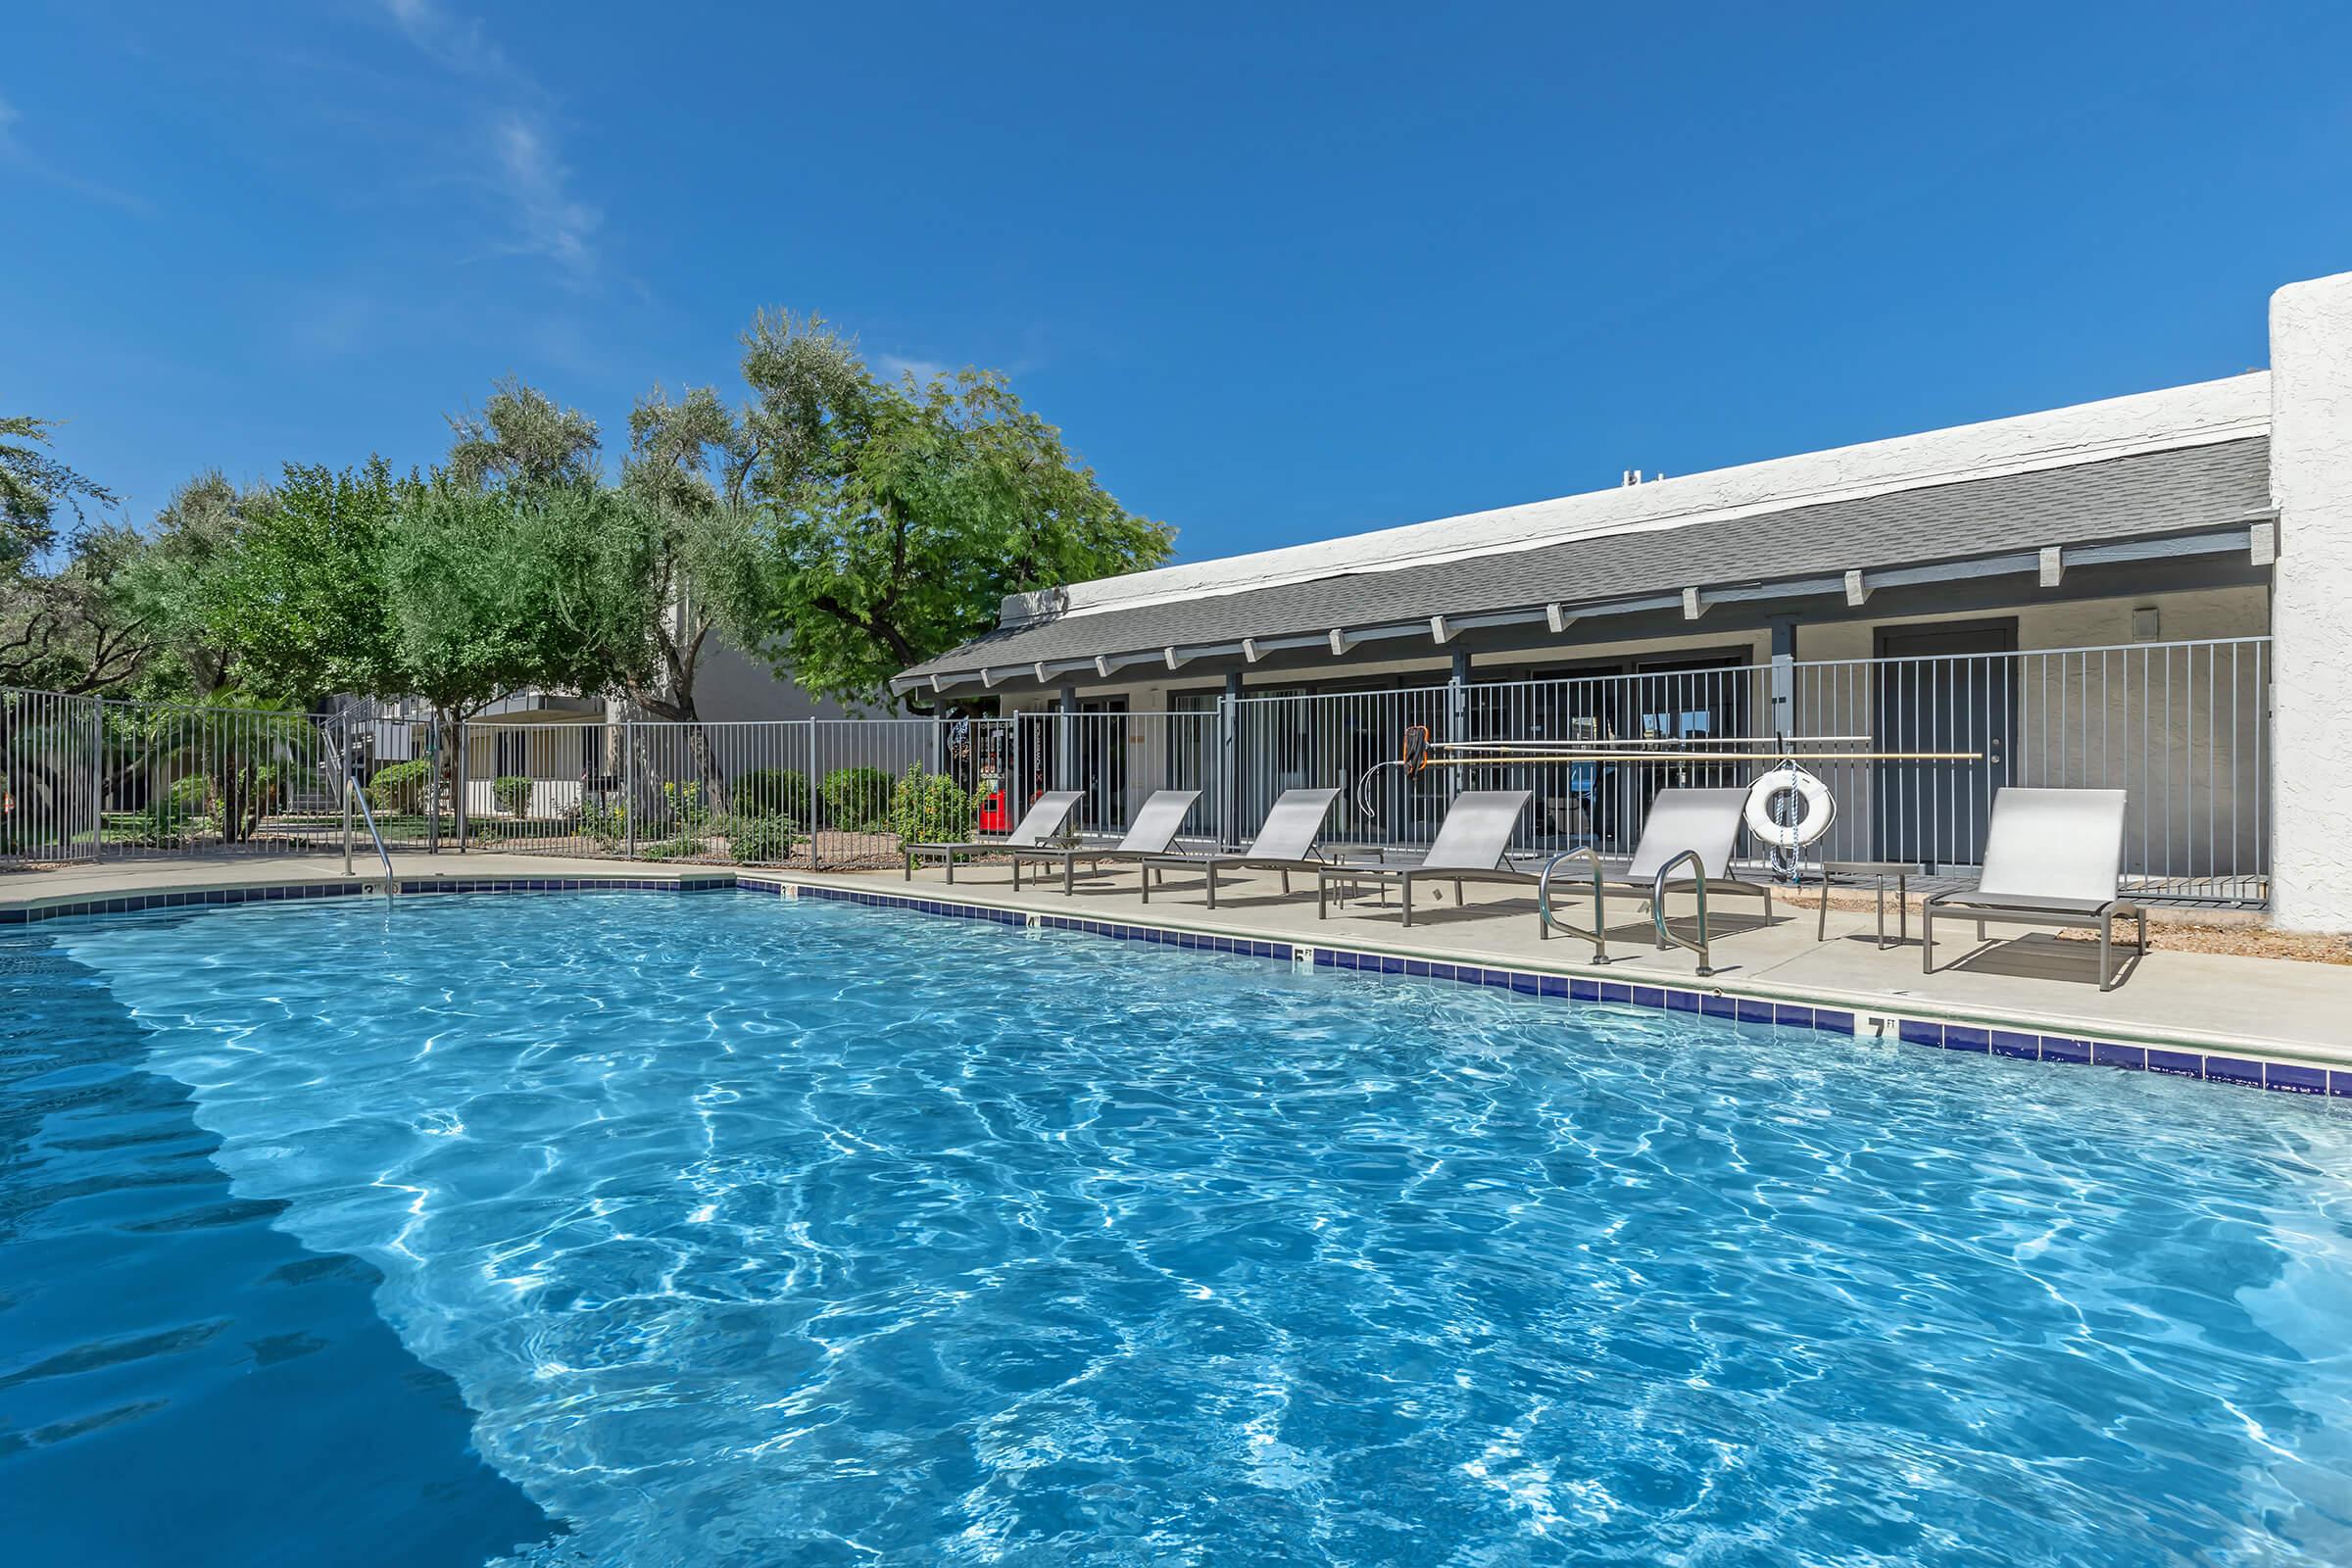 Large blue sparkling resort style pool